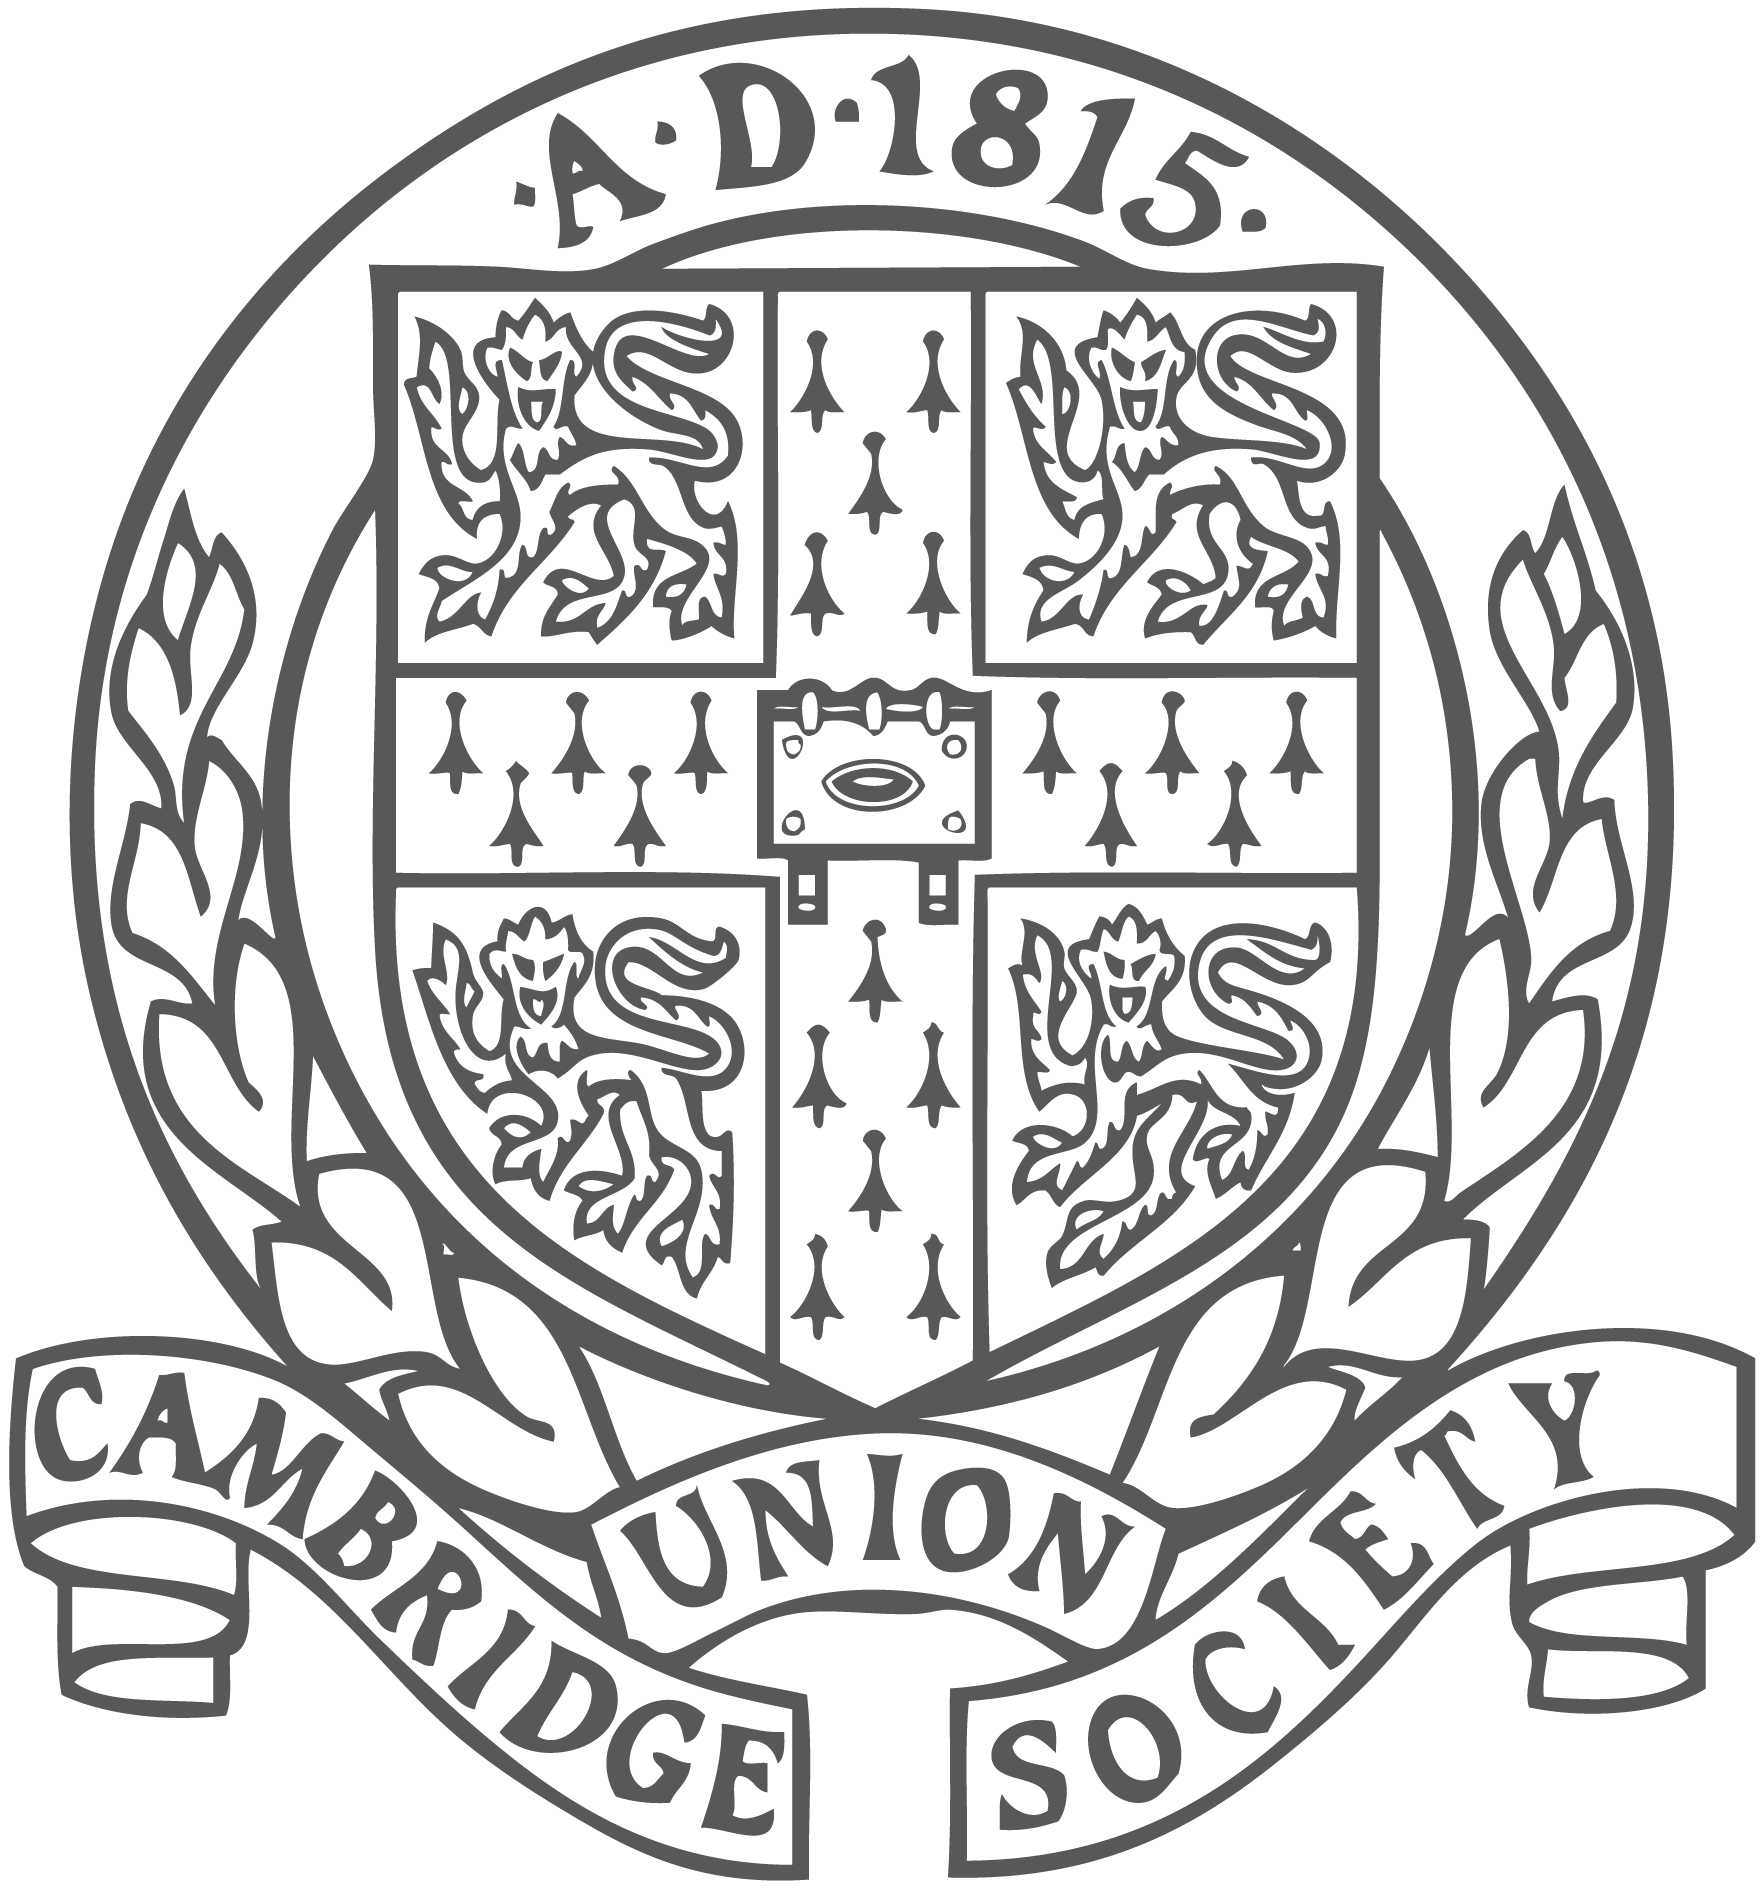 The Cambridge Union Crest Logo